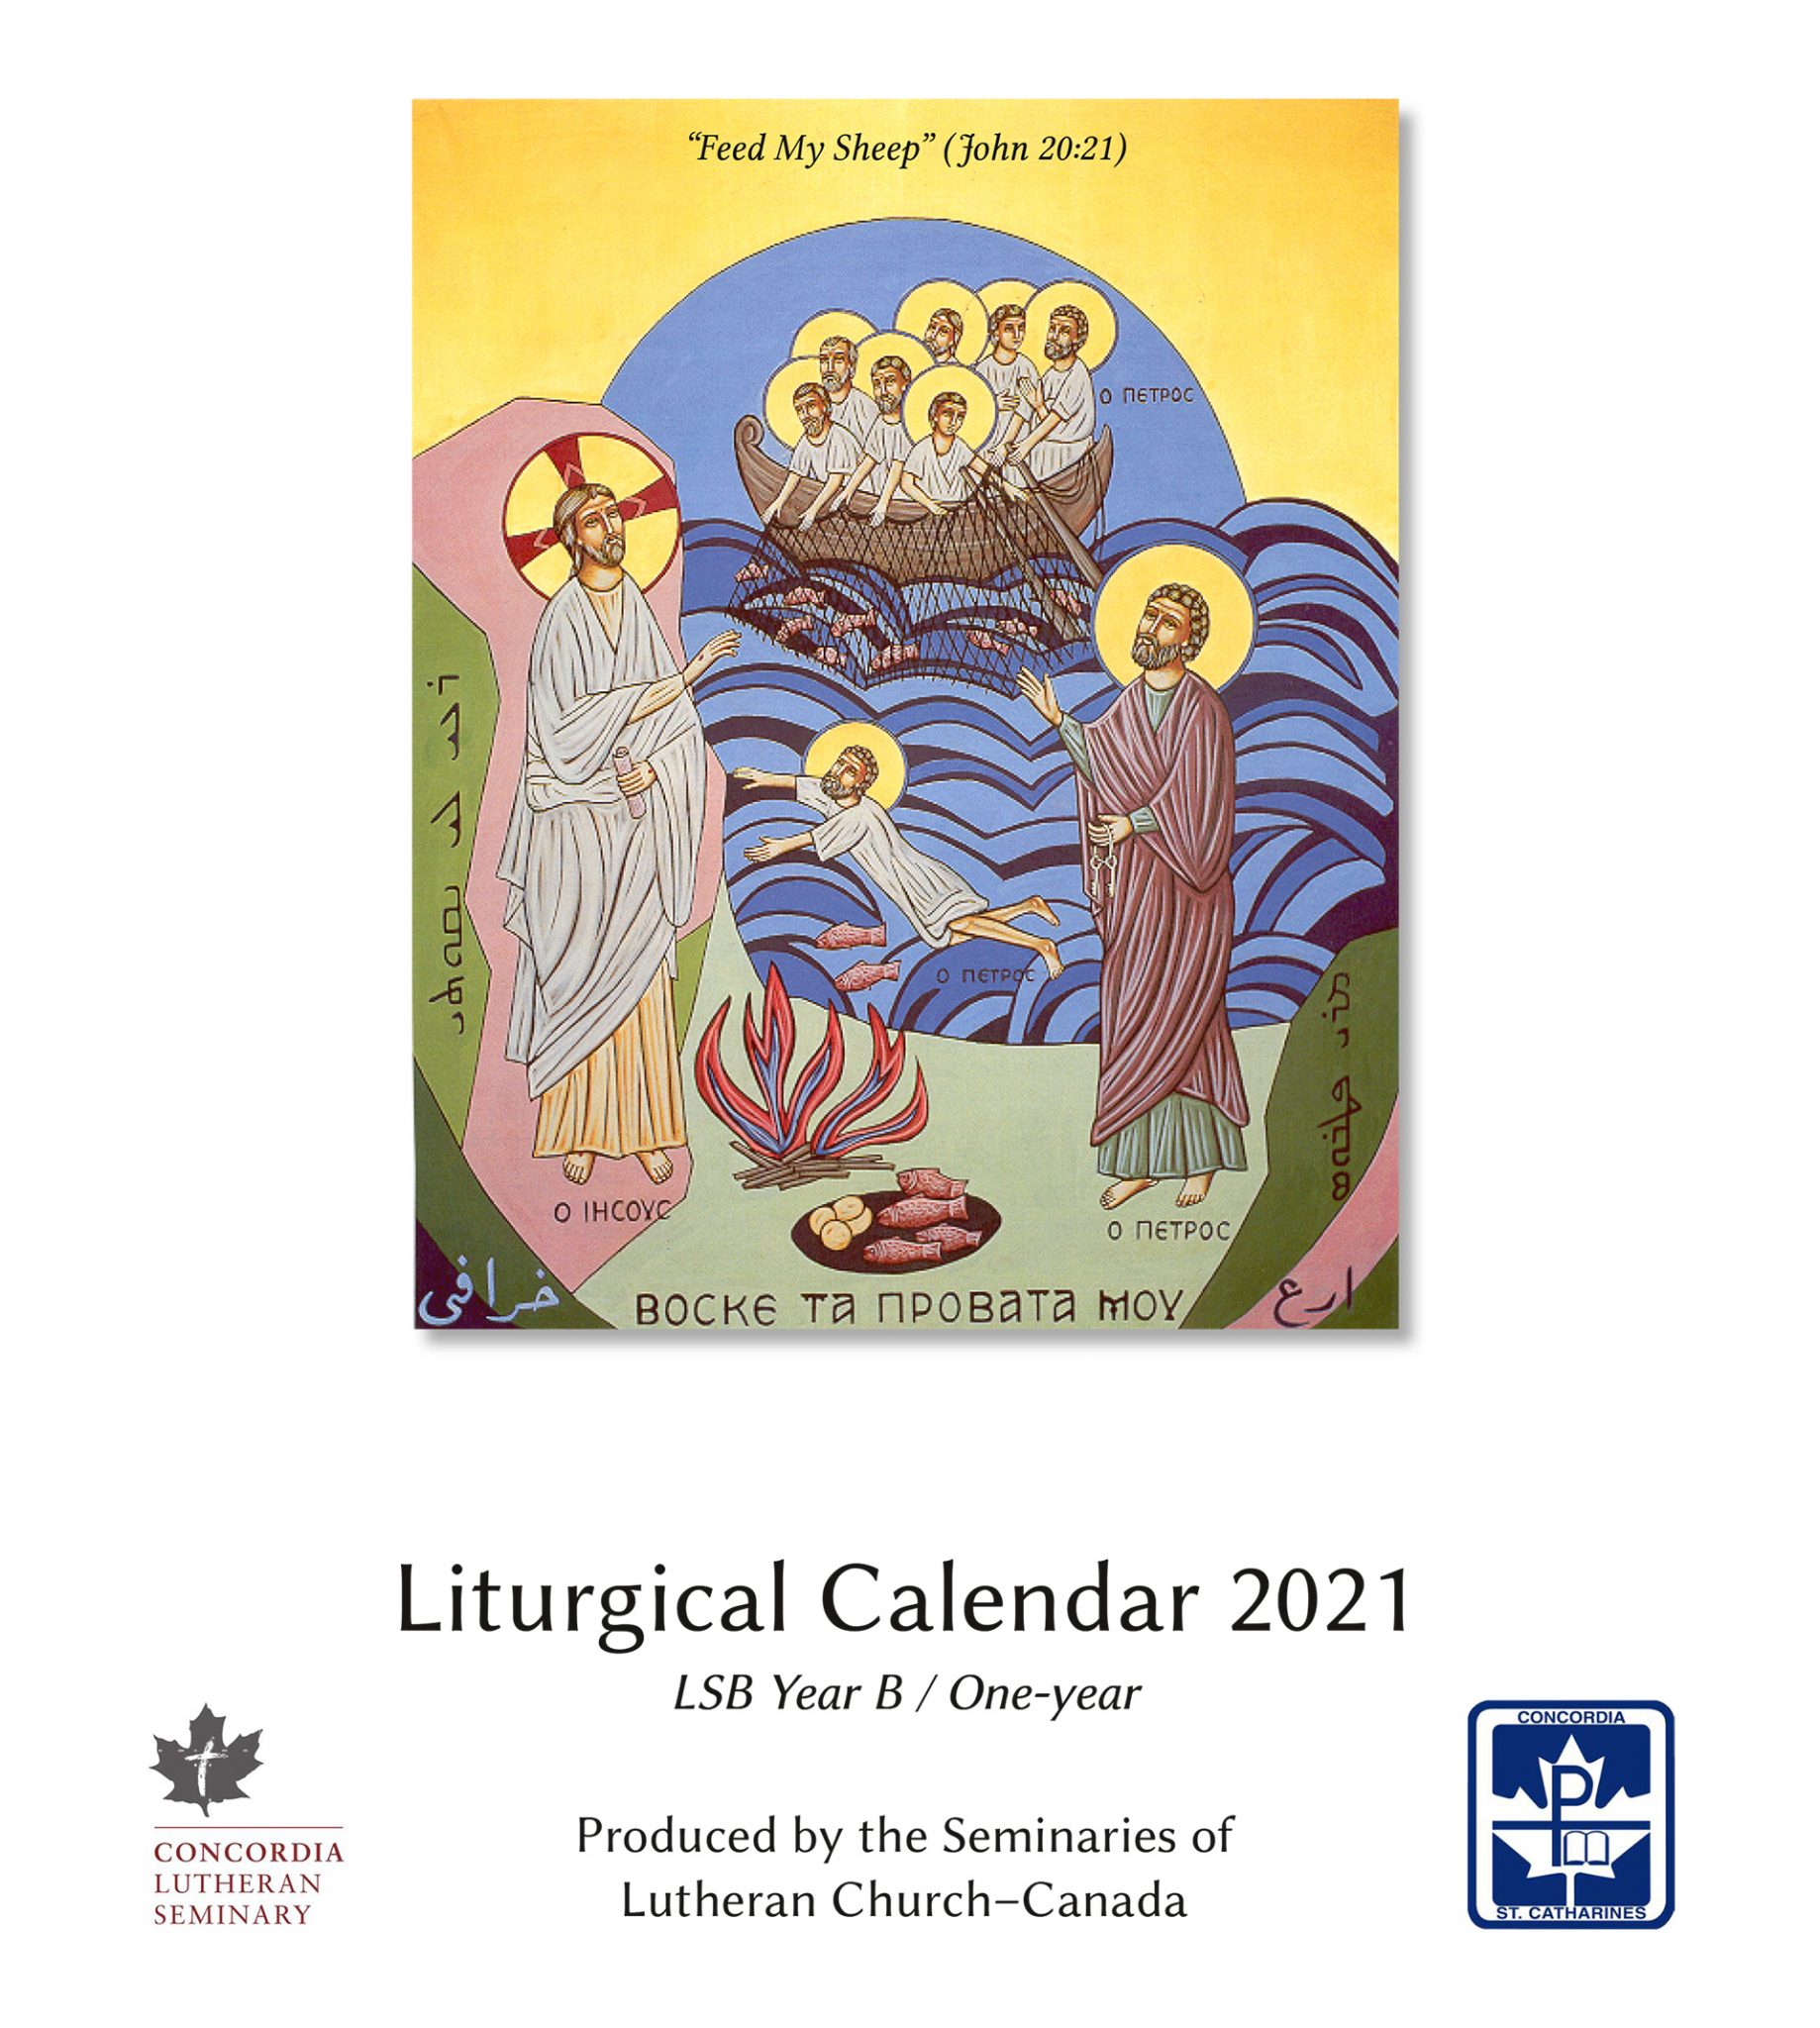 LCC seminaries release printathome 2021 liturgical calendar The